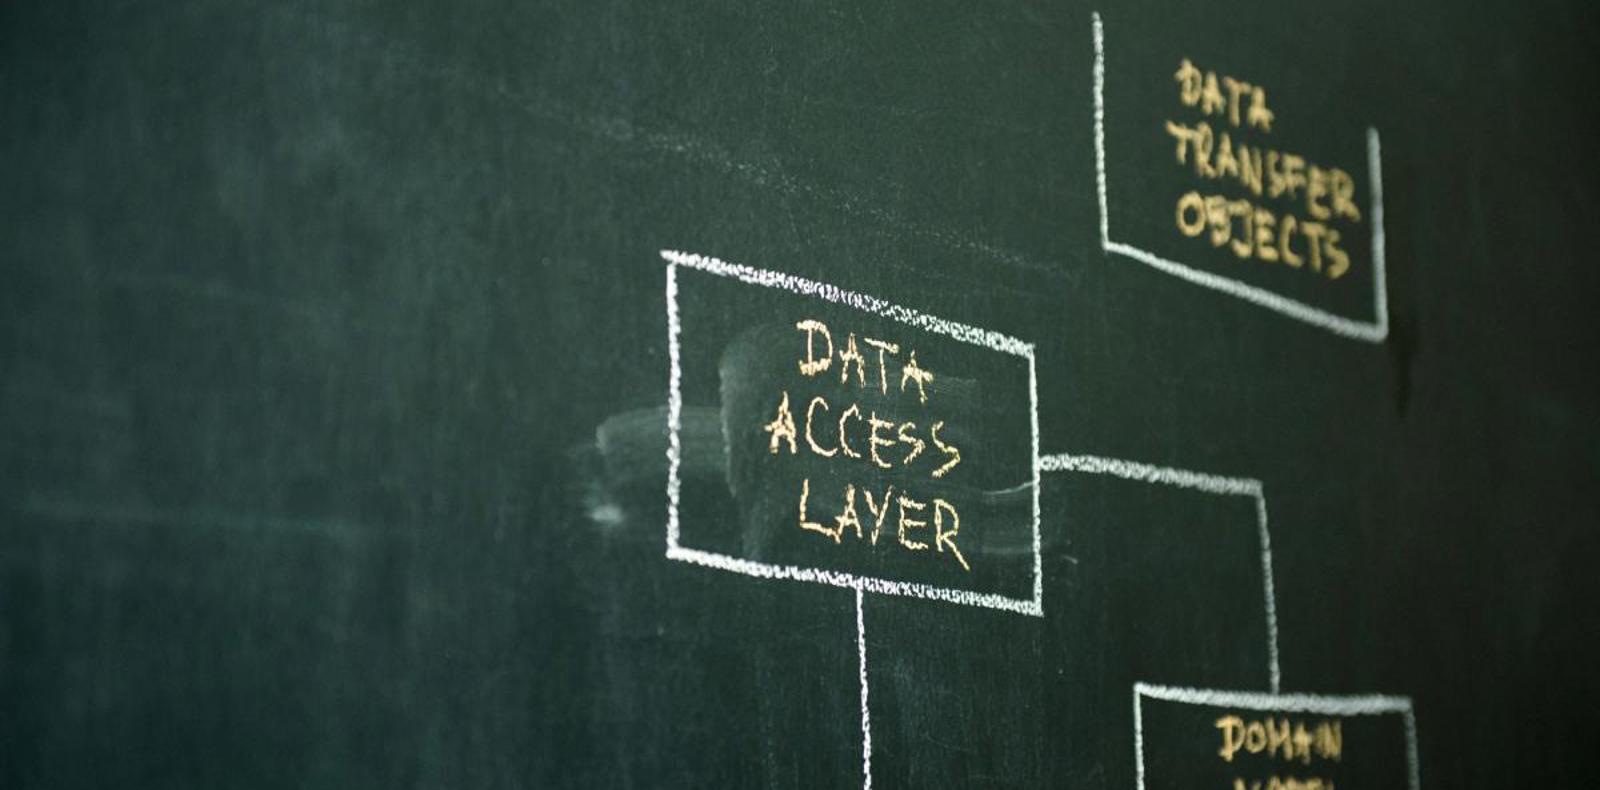 Diagram of data access layer on blackboard.